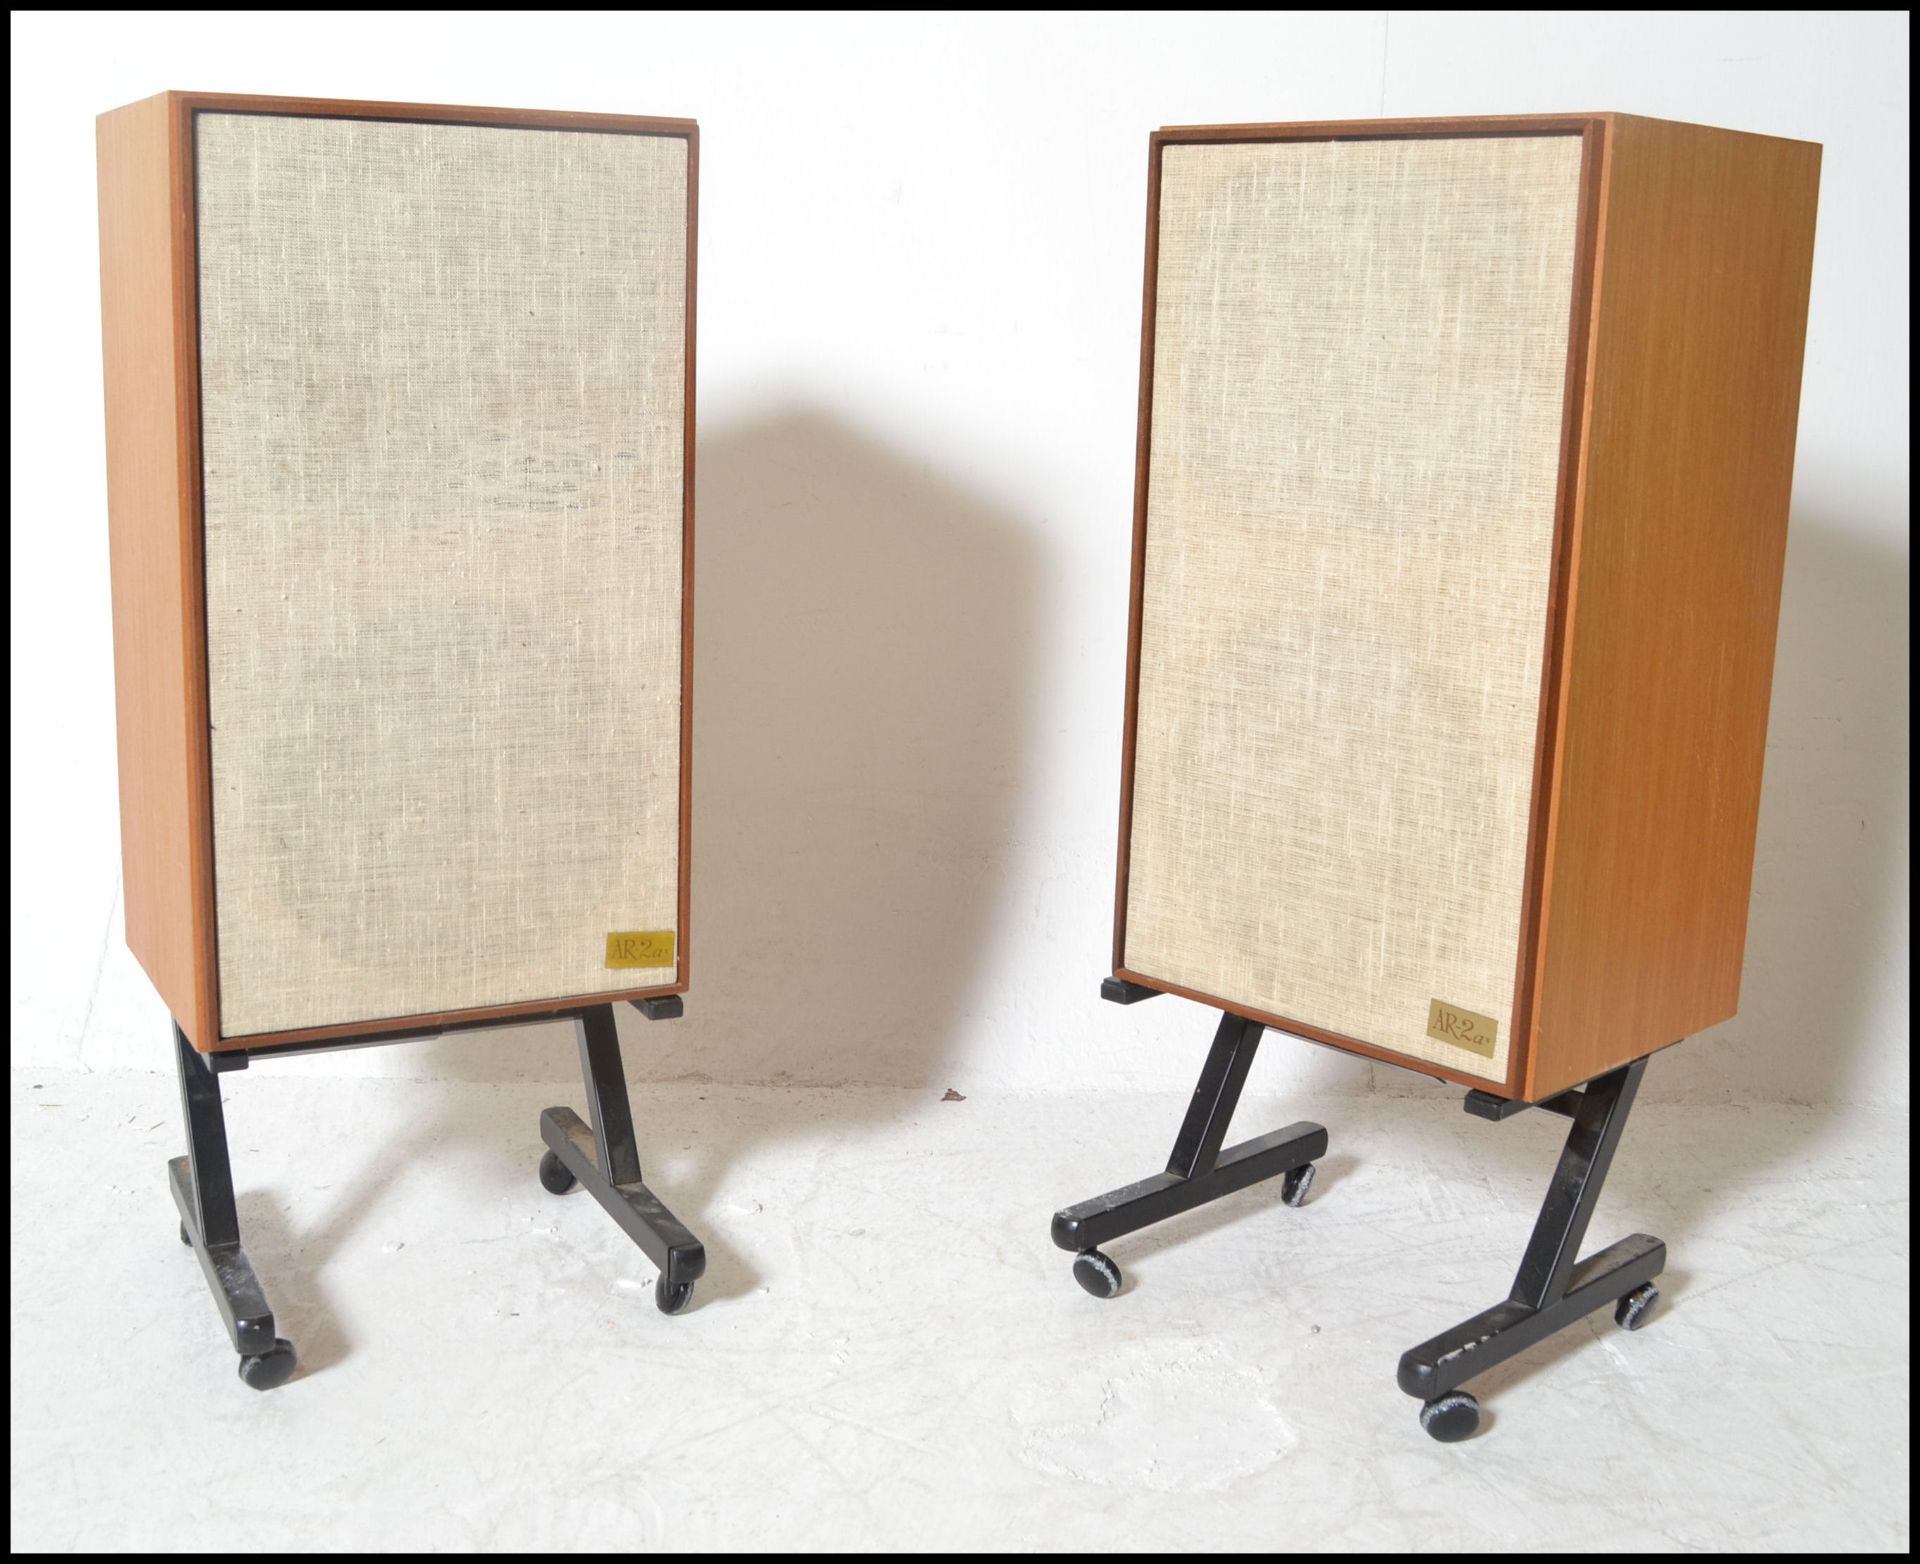 A pair of 20th century Danish influenced teak wood cased Acoustic Suspension AR - 2AX speakers,